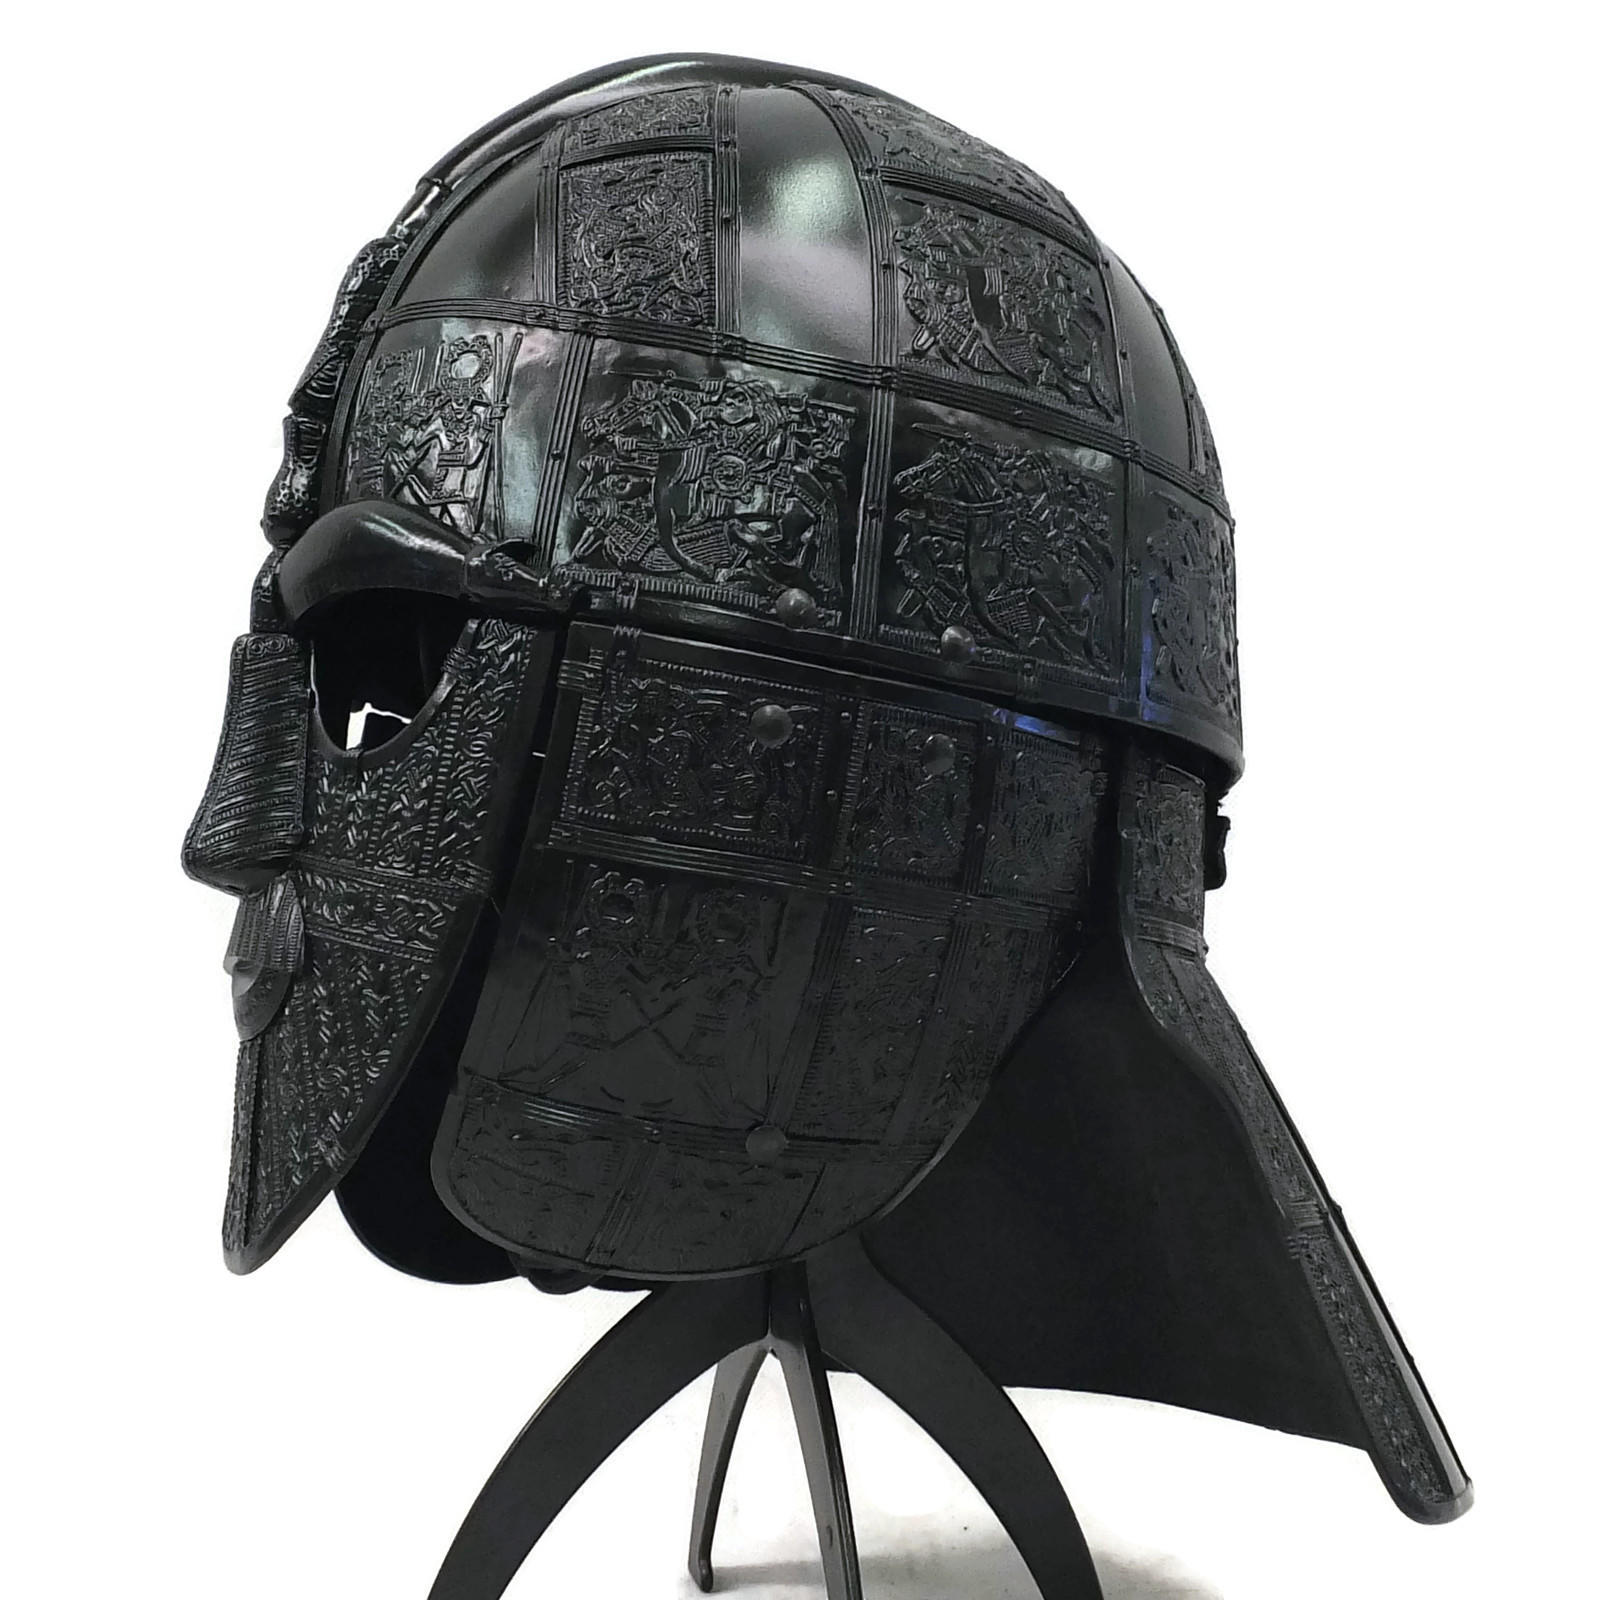 Sutton hoo larp helmet black